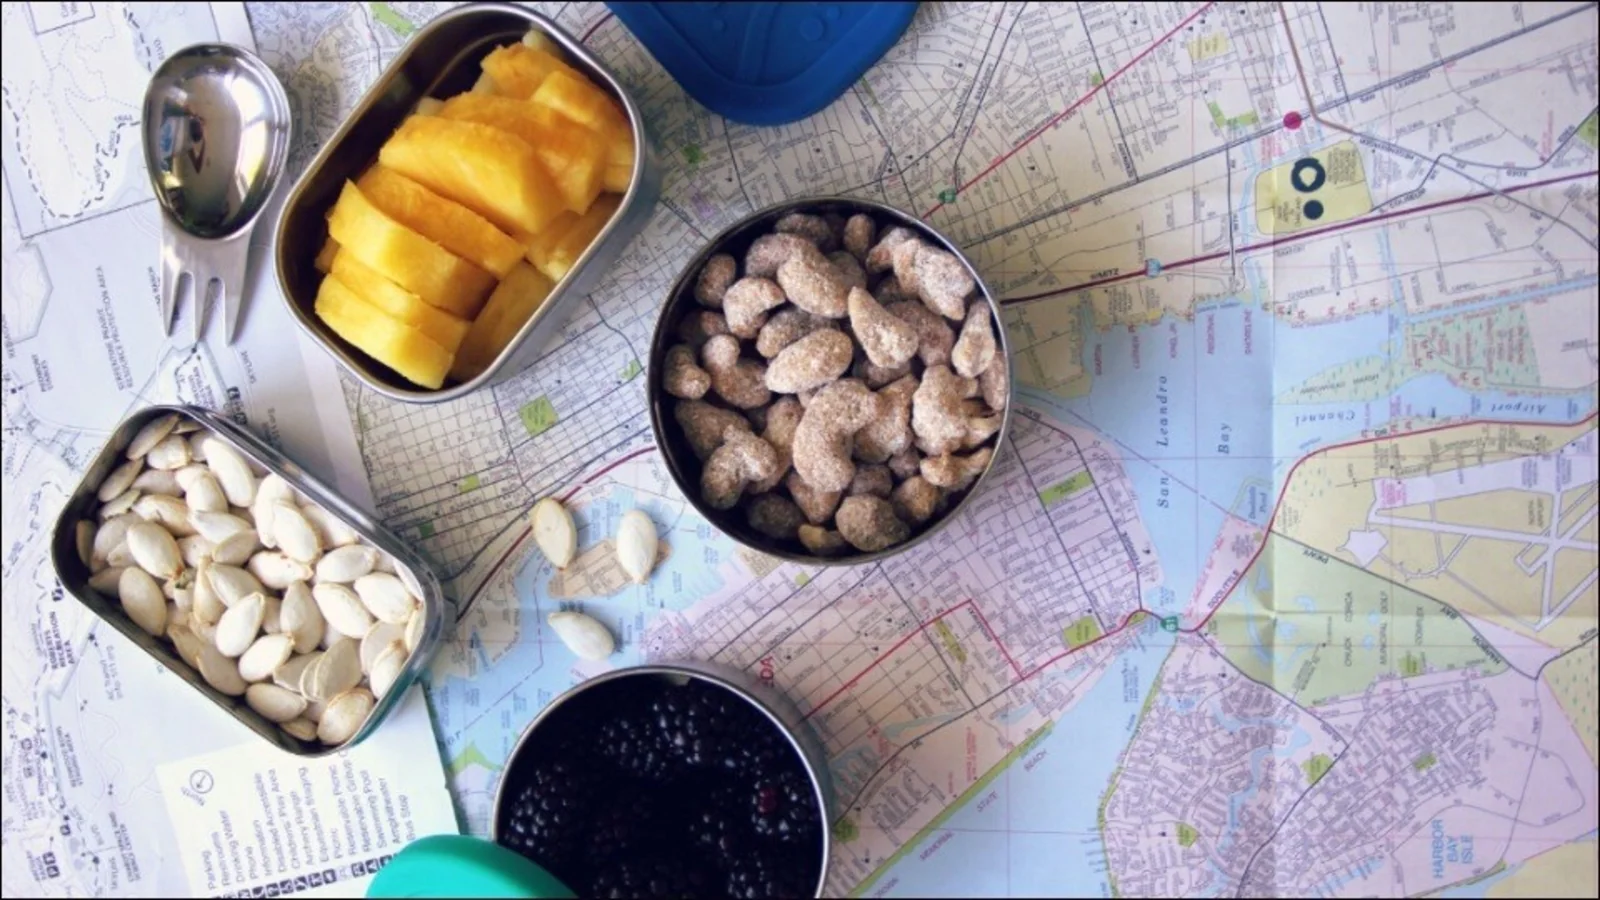 Summer food essentials: Healthy road trip snacks